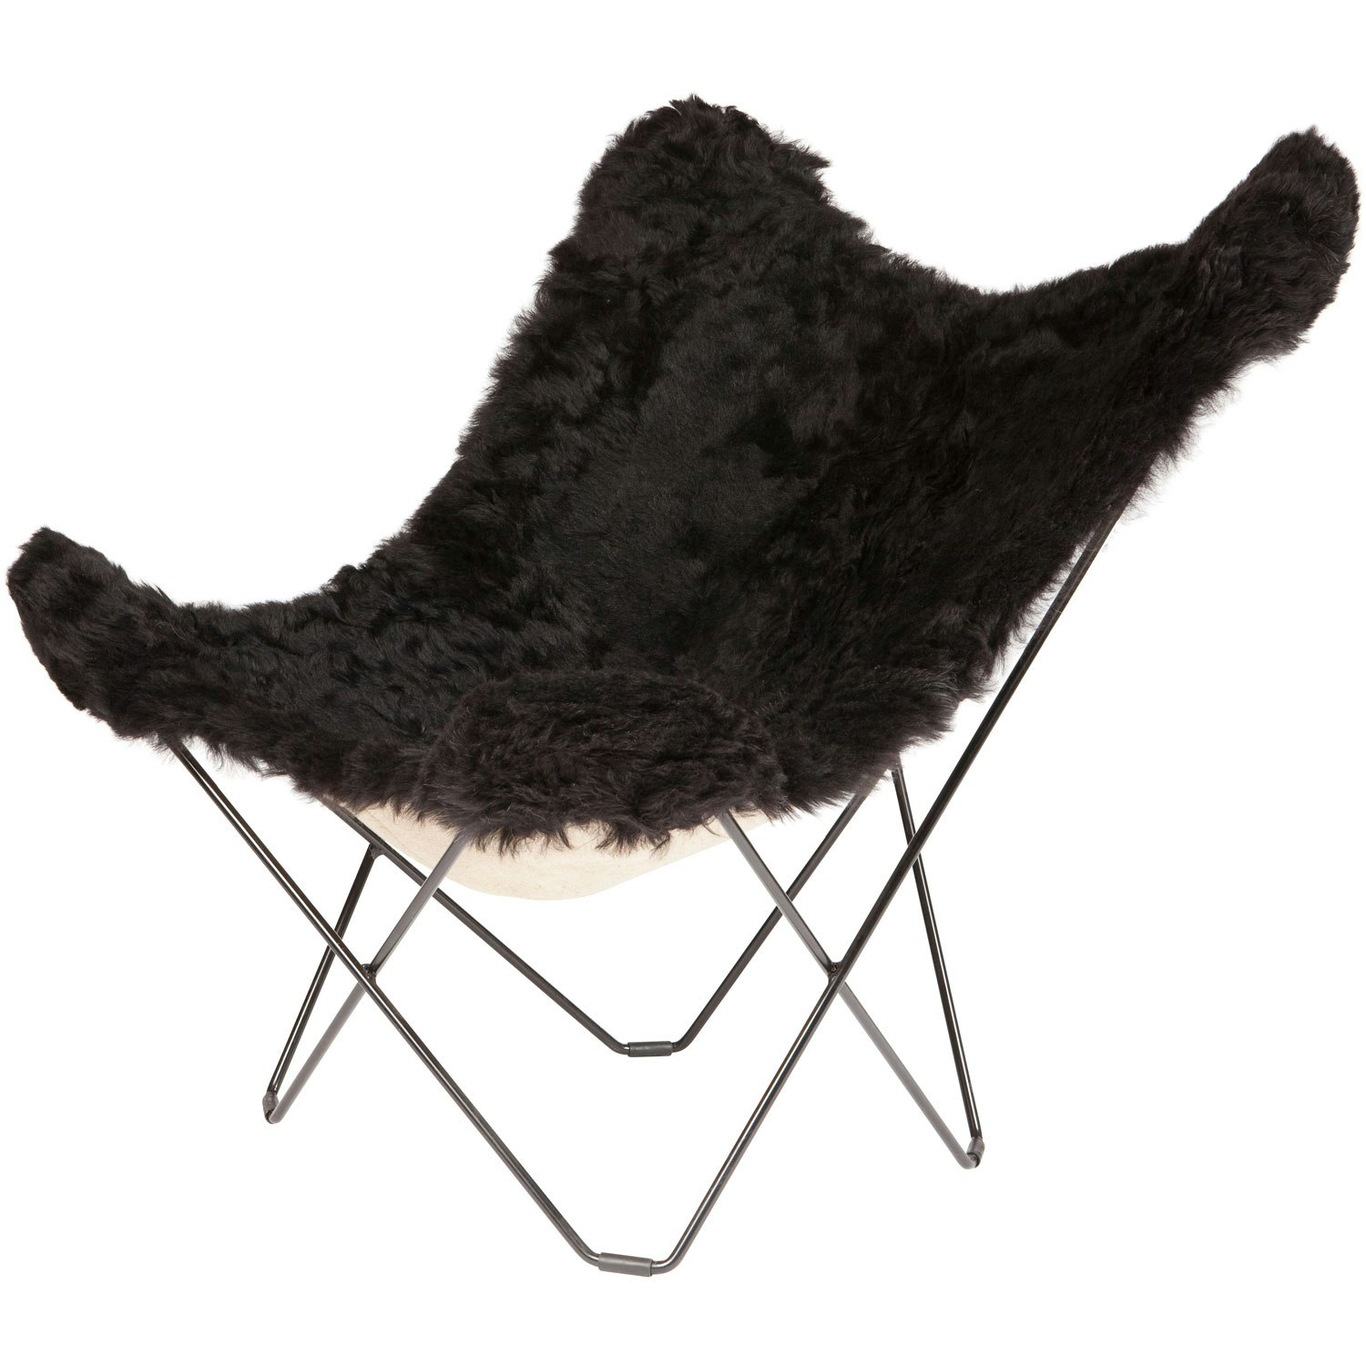 Iceland Mariposa Butterfly Chair, Shorn Black/Black